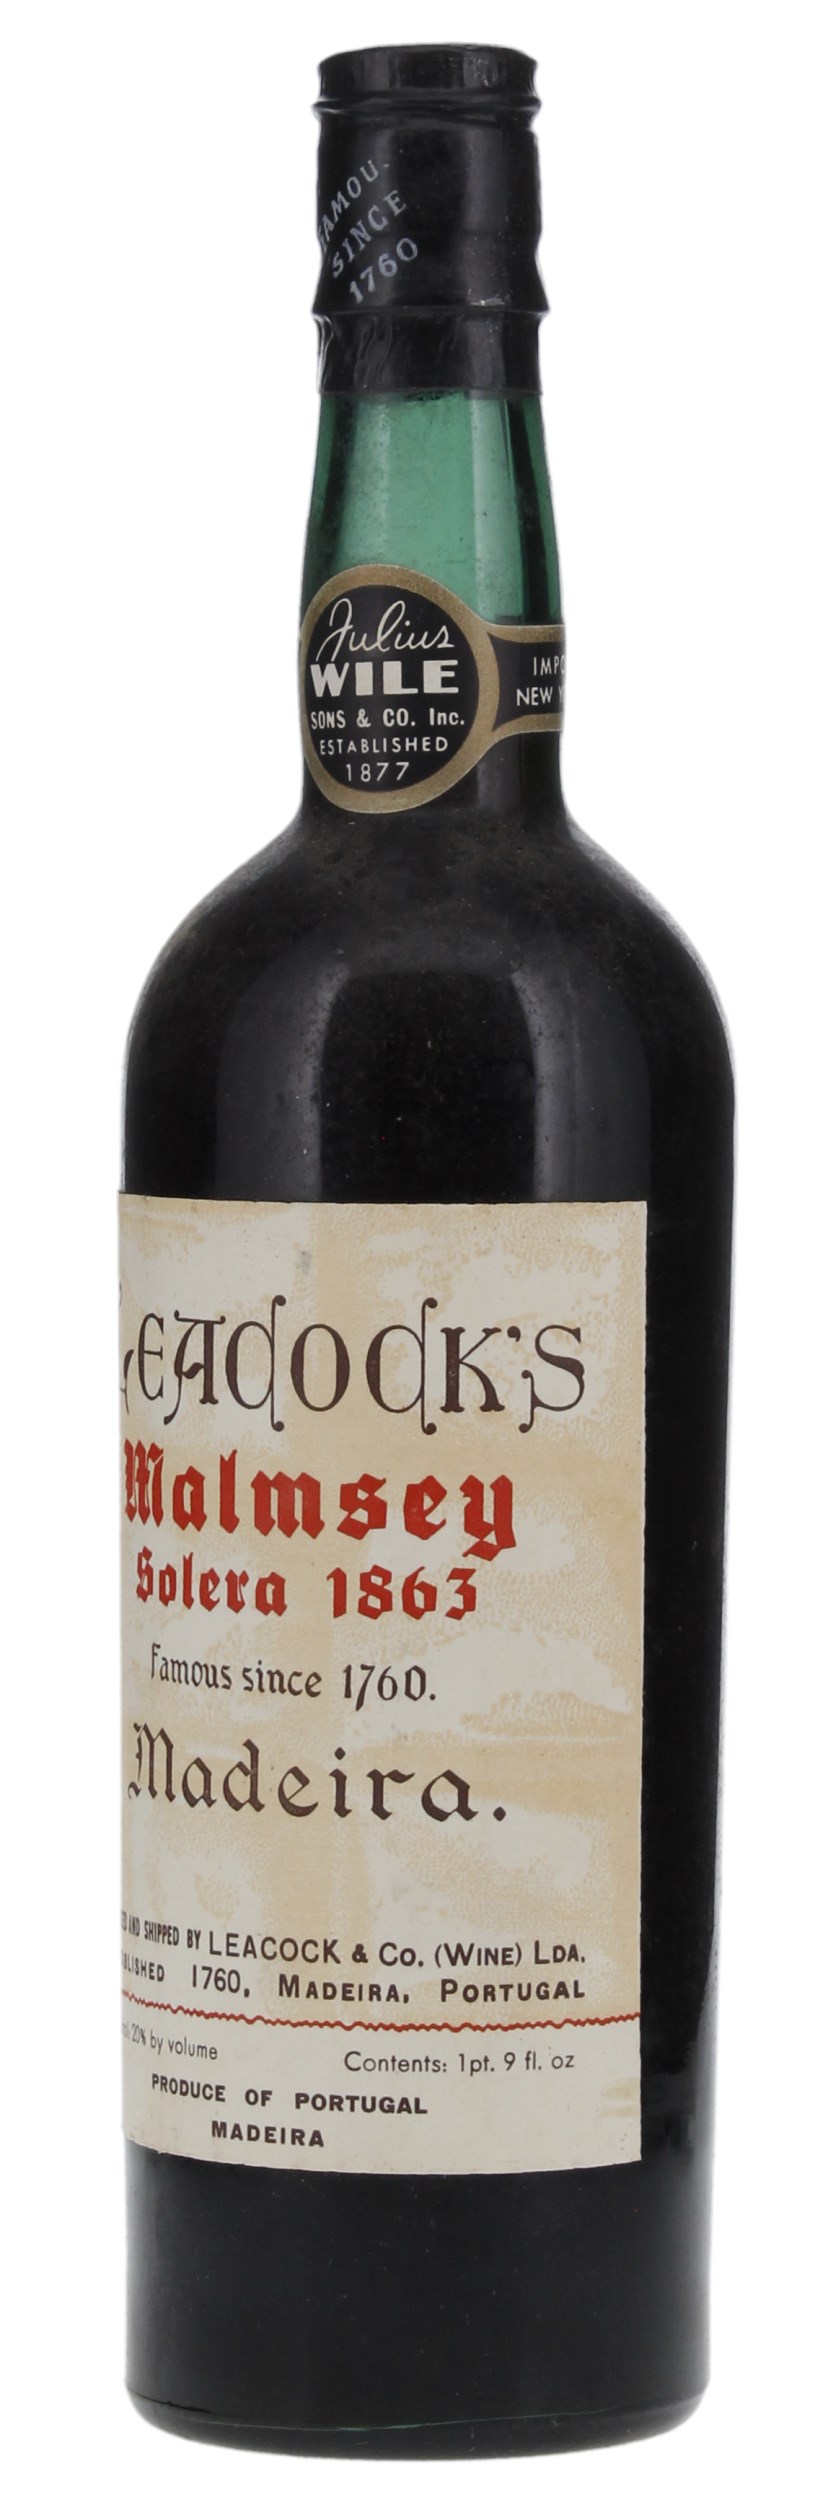 N.V. Leacock Malmsey Solera 1863 Madeira, 750ml